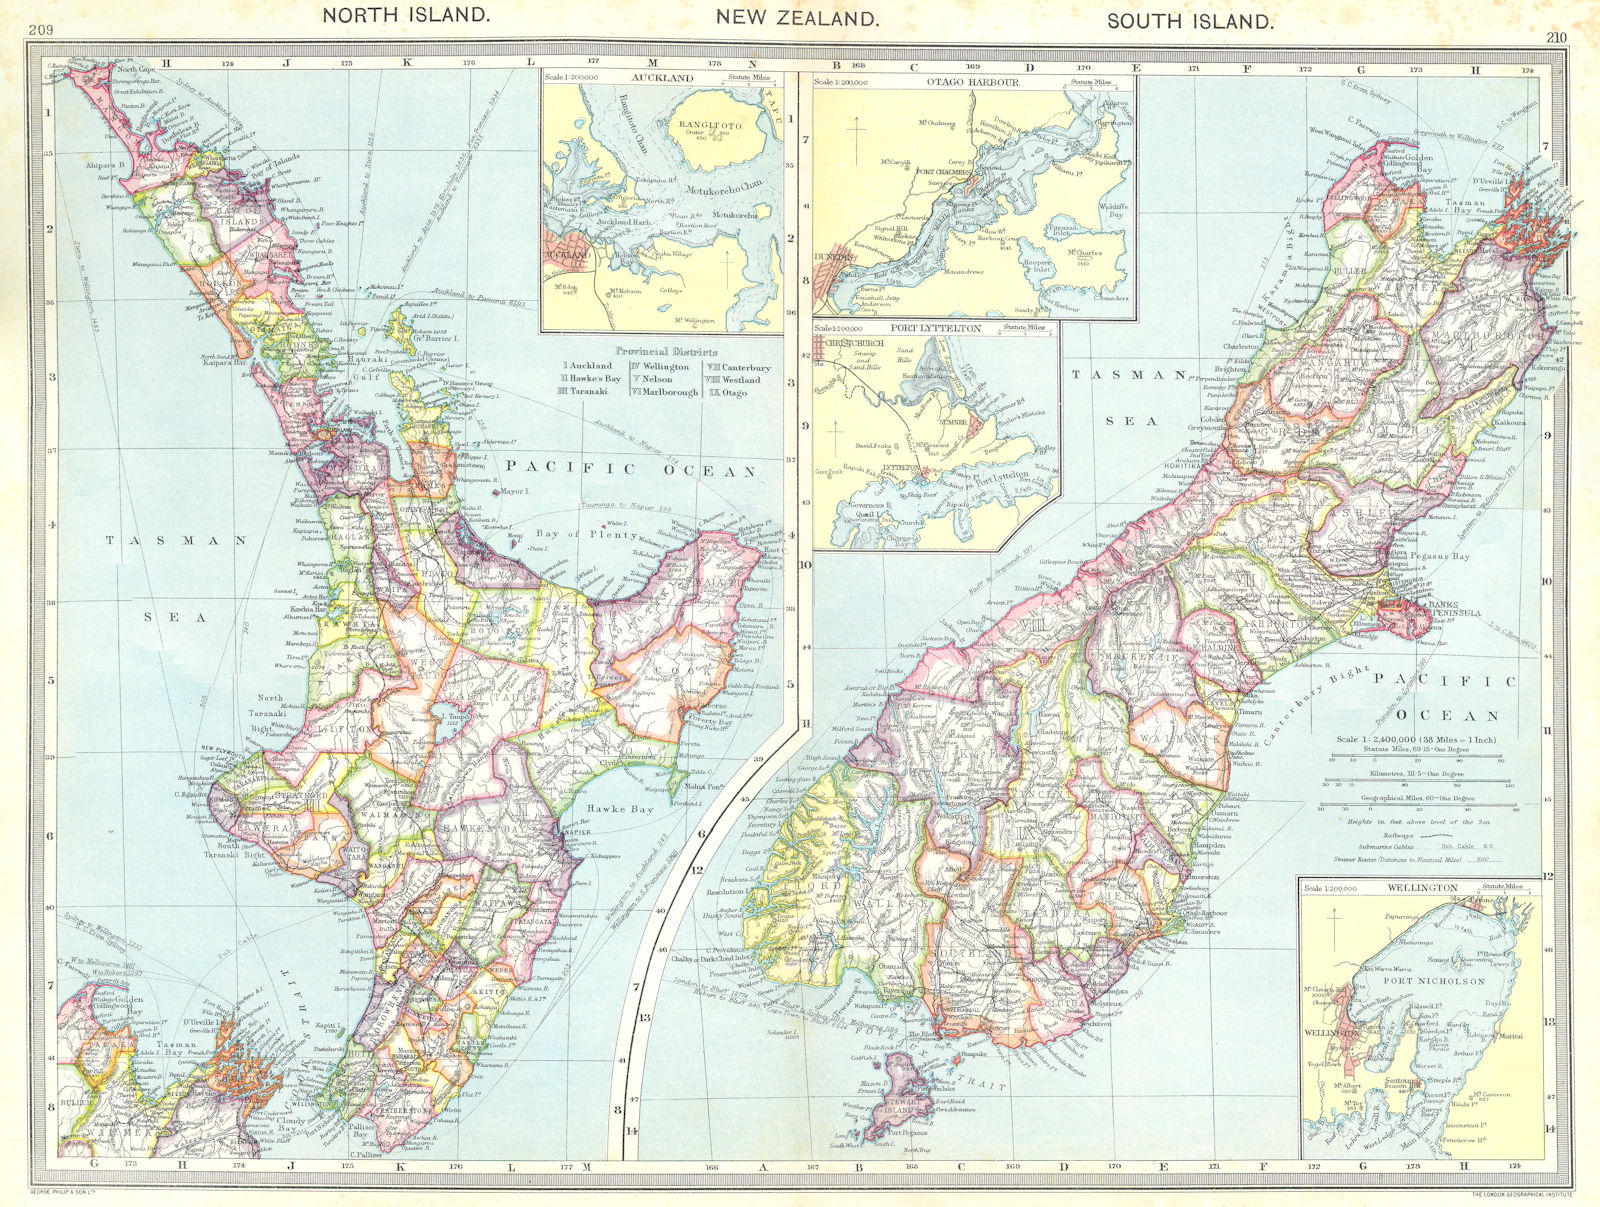 NEW ZEALAND. Maps of Auckland; Otago Harbour; port Lyttelton; Wellington 1907